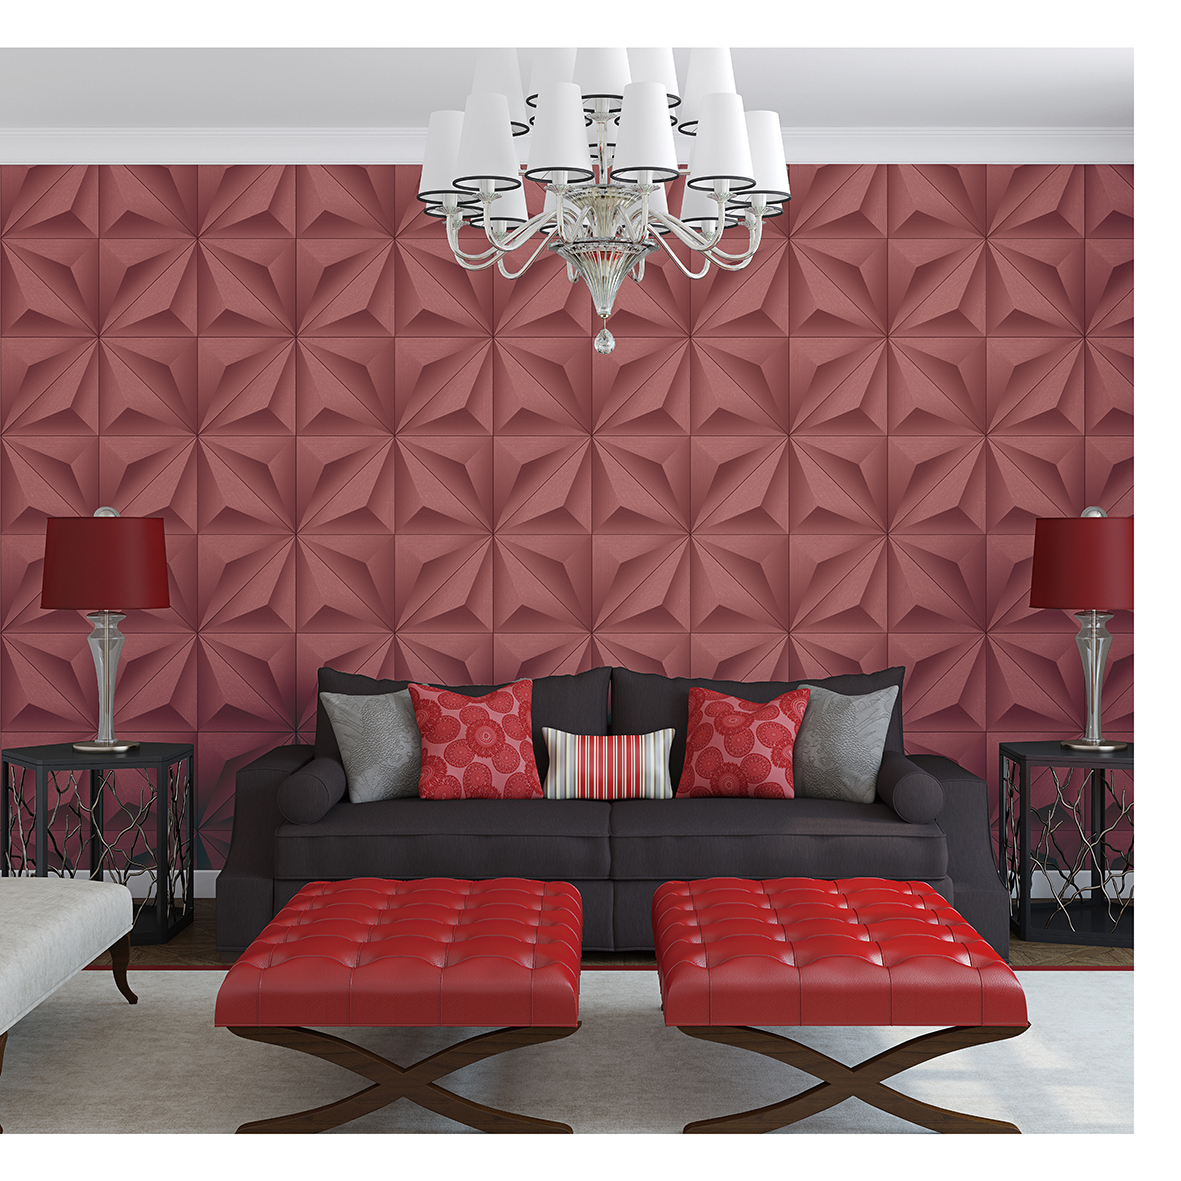 wallpaper design,red,orange,room,wallpaper,furniture